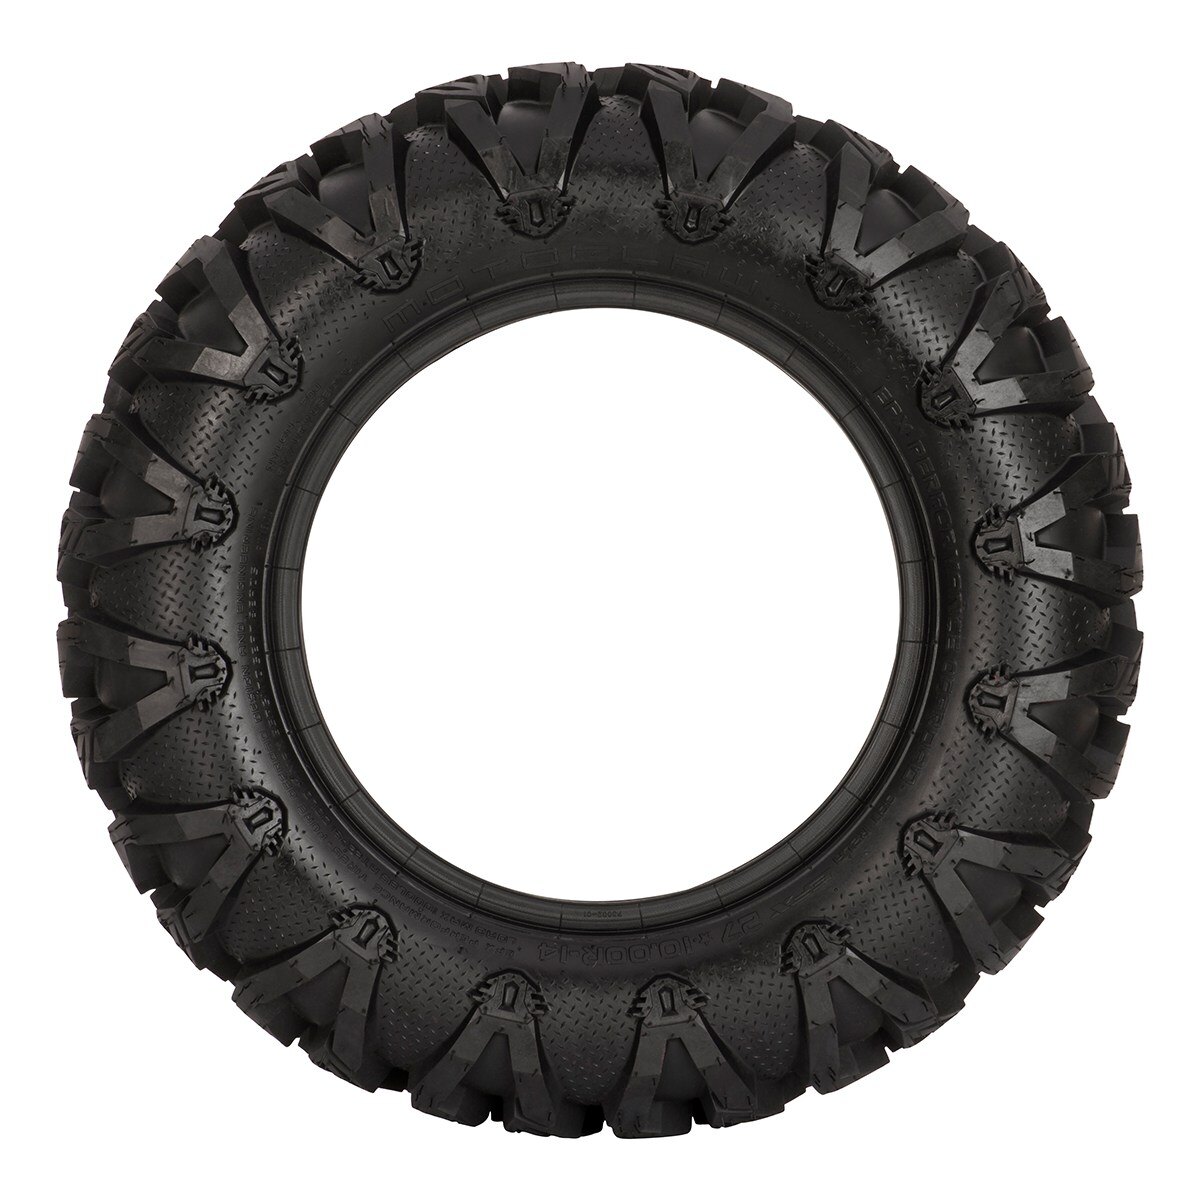 EFX® MotoClaw Tire